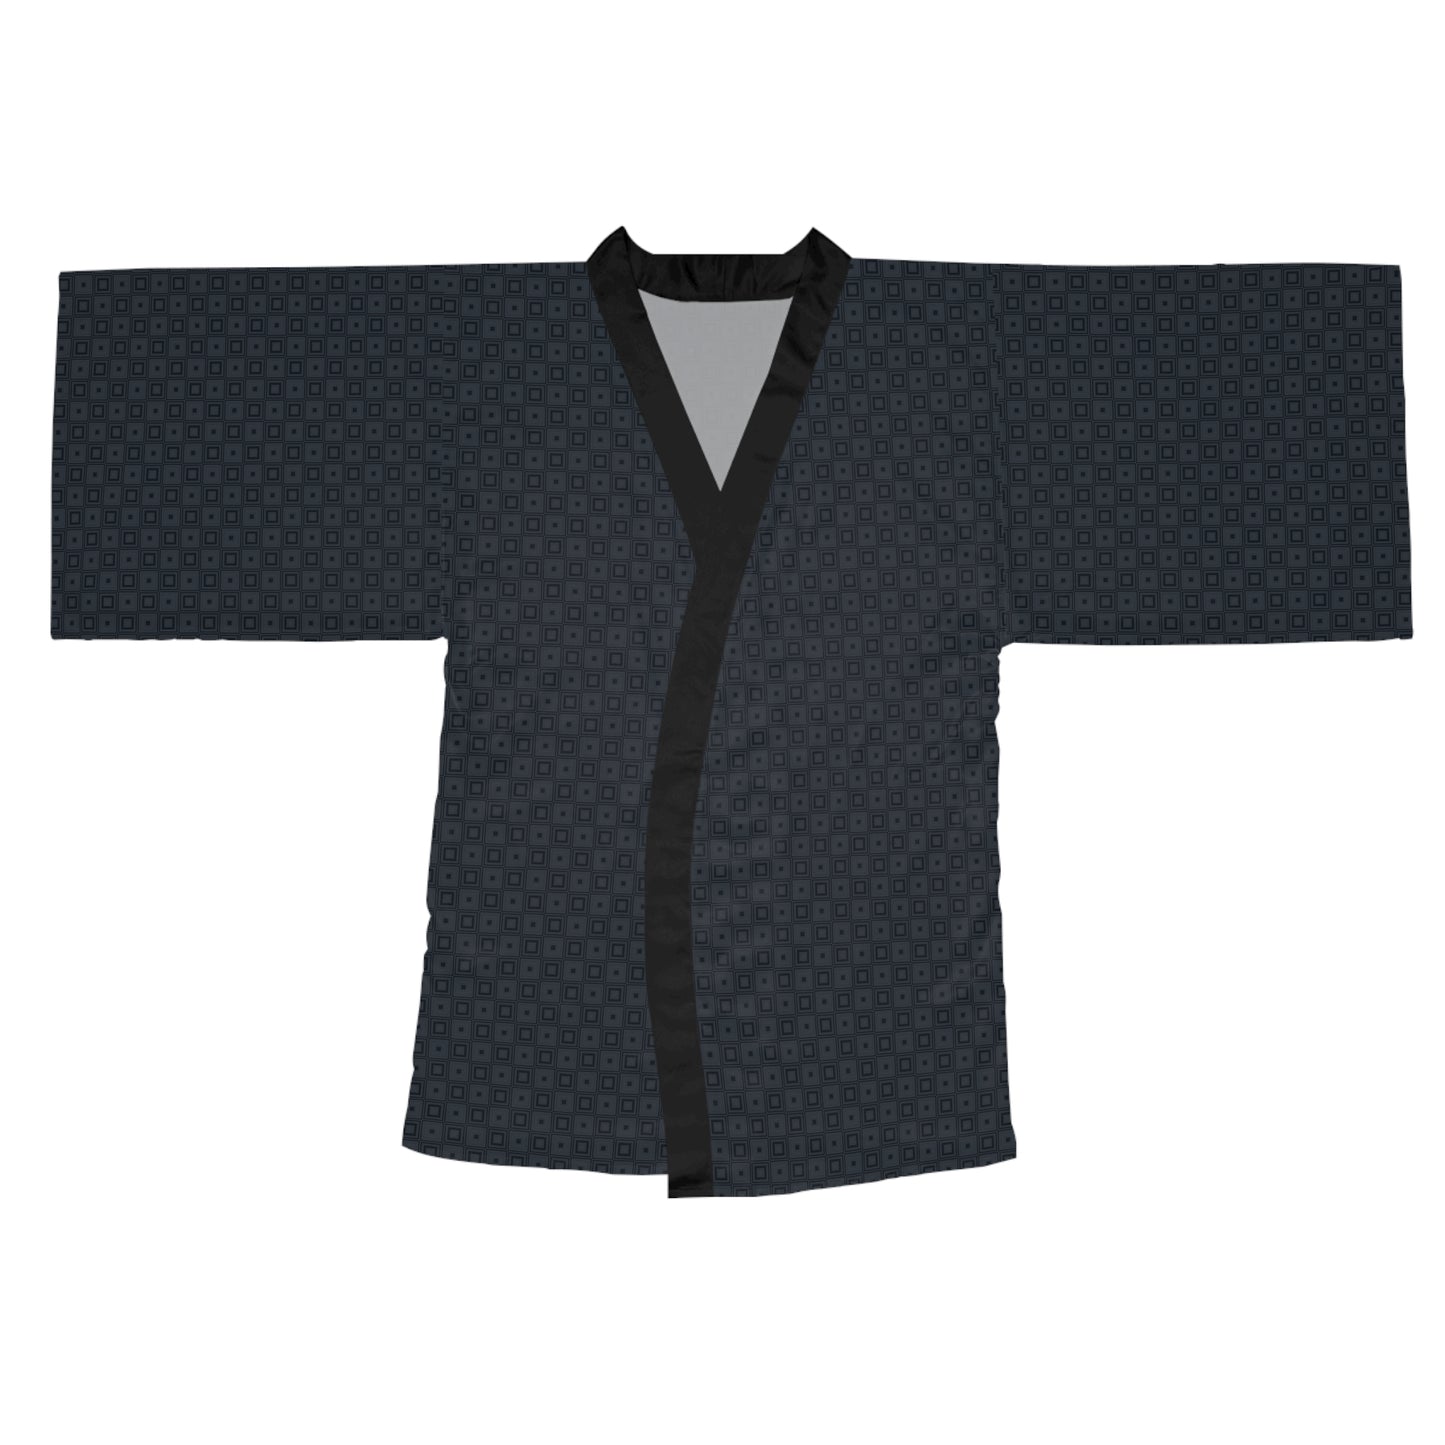 Onyx - Dark Jungle Green Squares - Long Sleeve Kimono Robe (AOP)